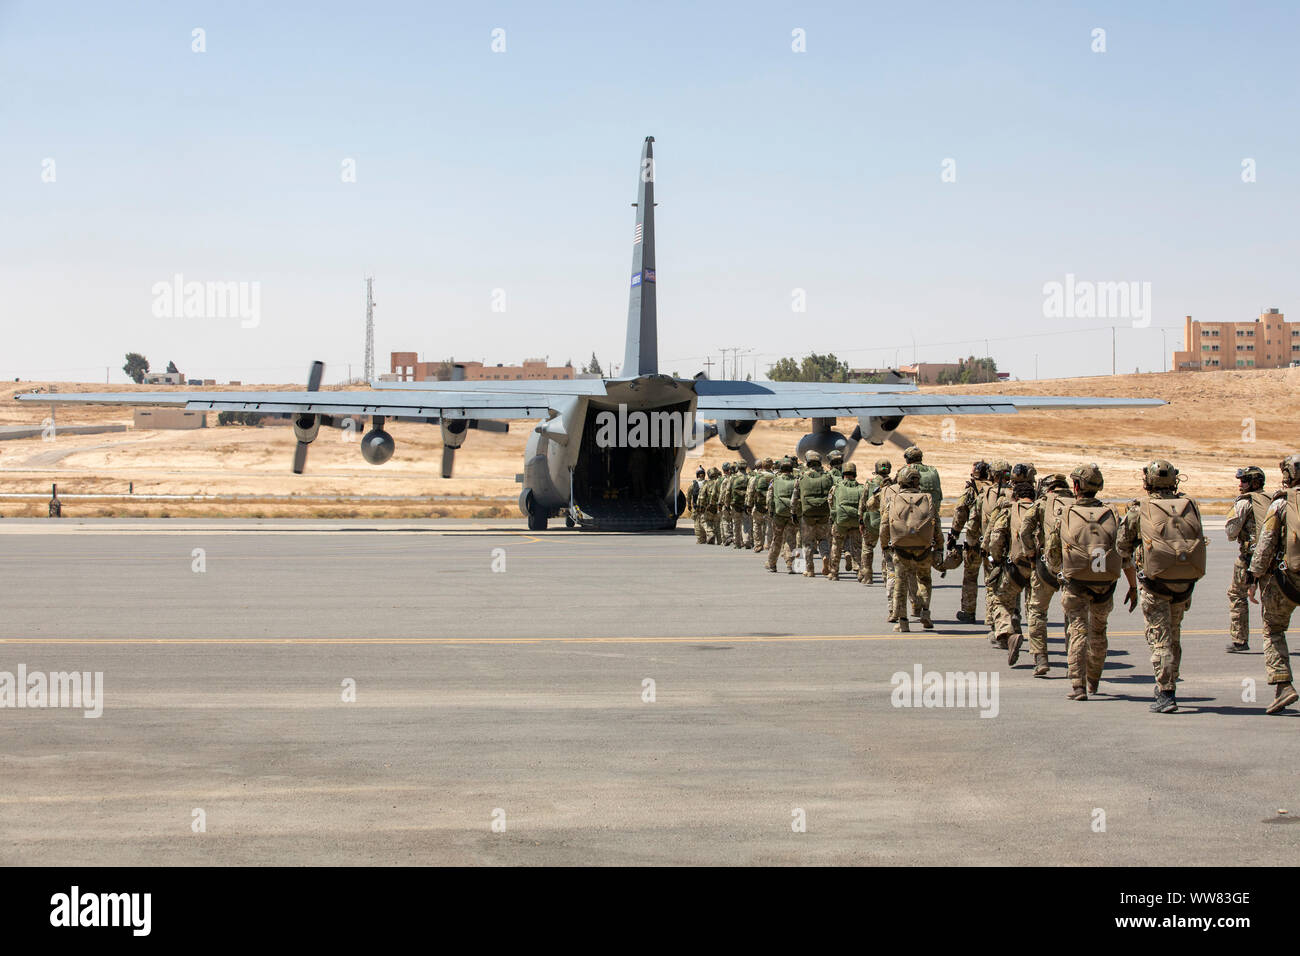 King abdullah ii air base hi-res stock photography and images - Alamy